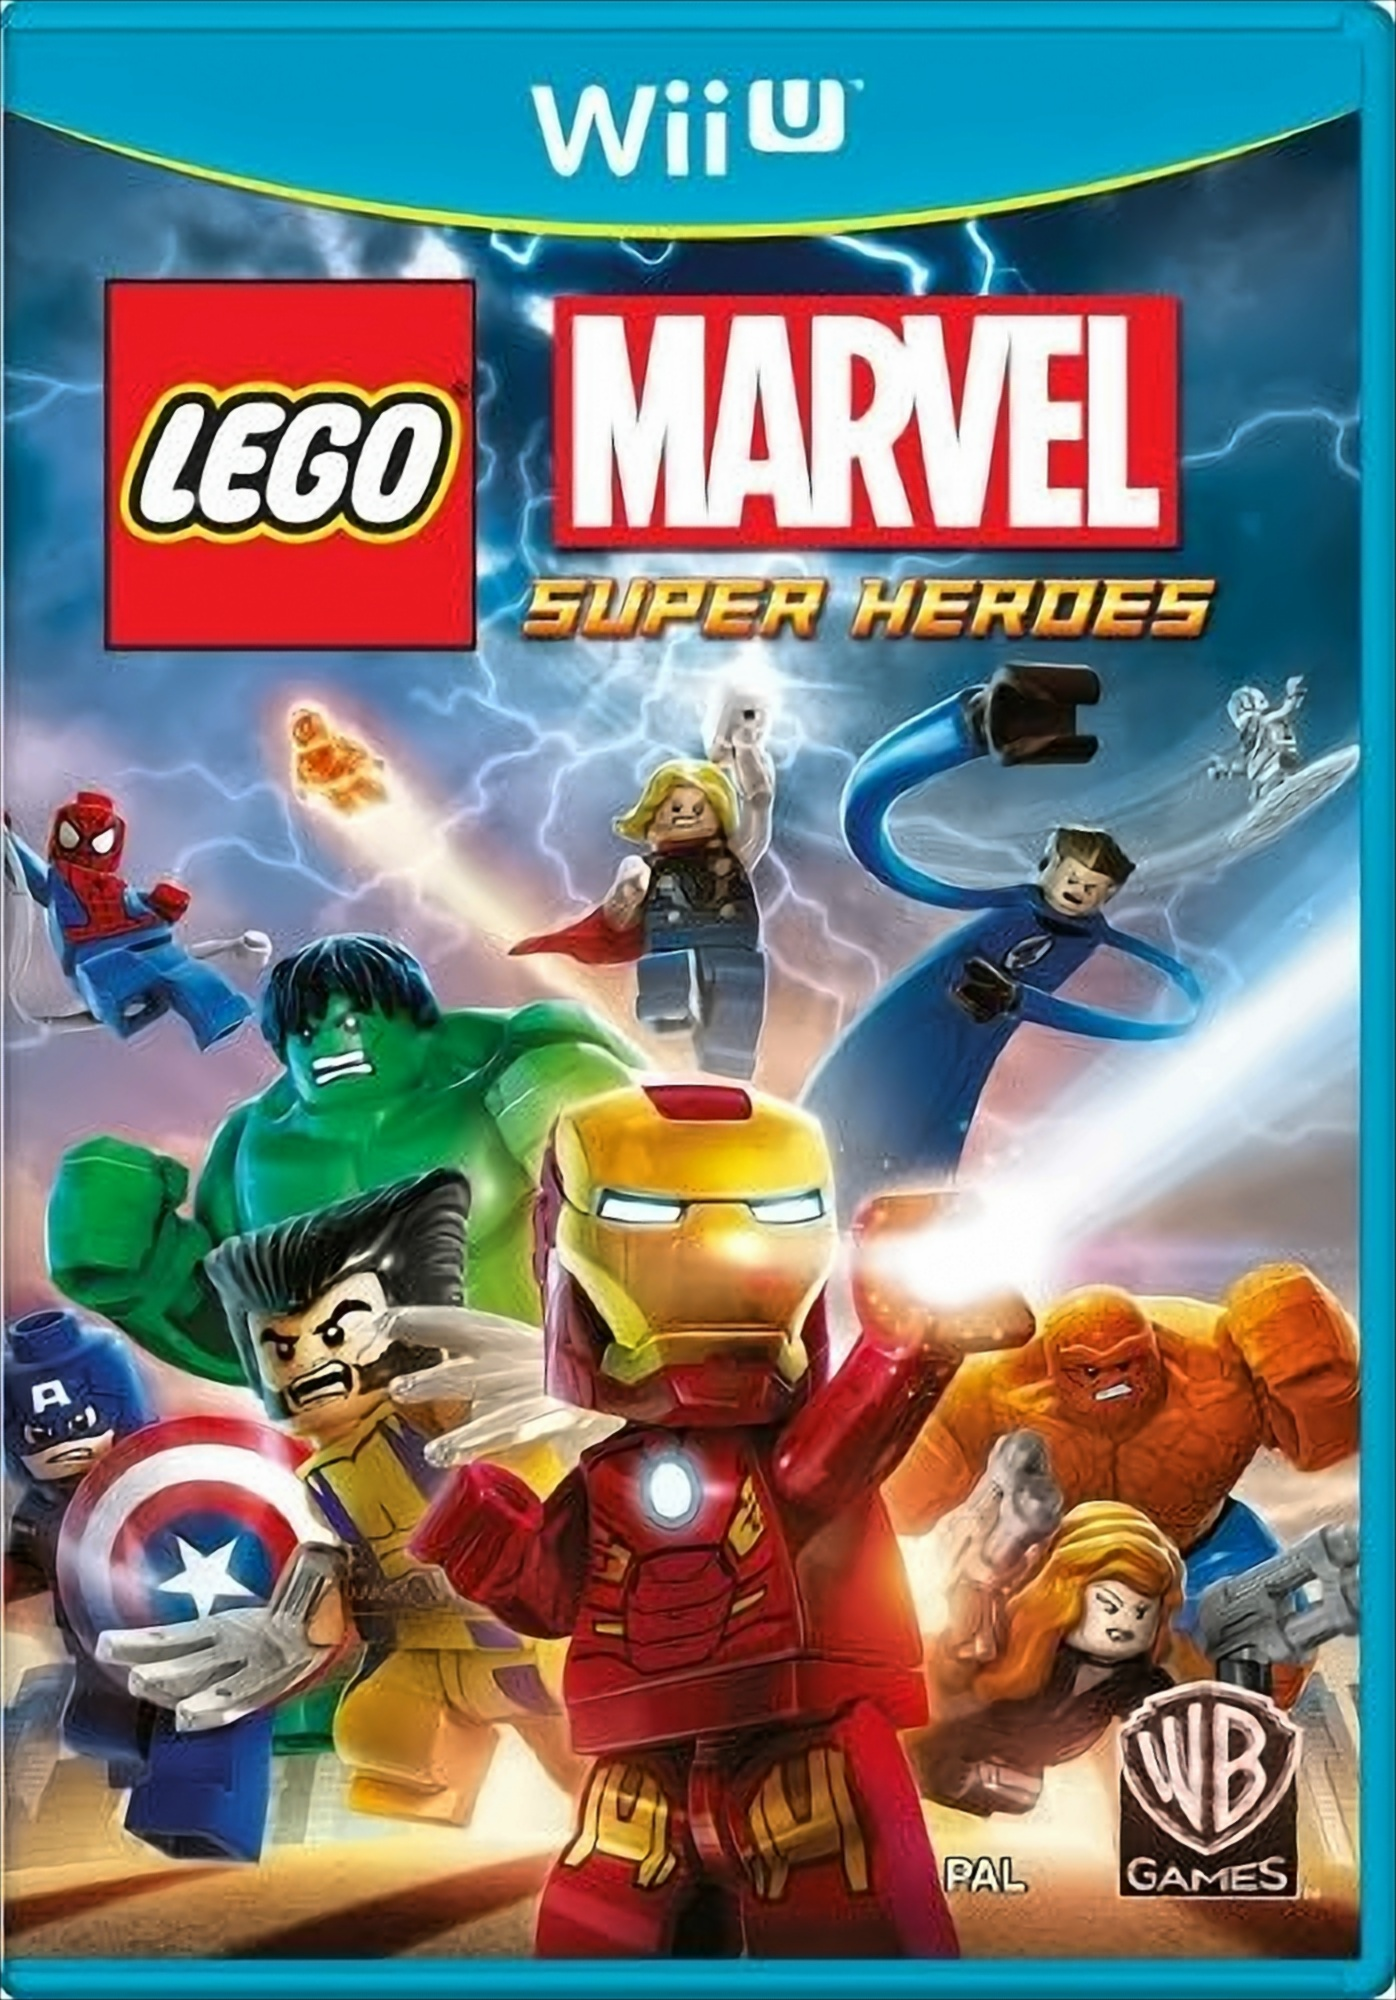 Wii] Heroes Lego Marvel - [Nintendo Super